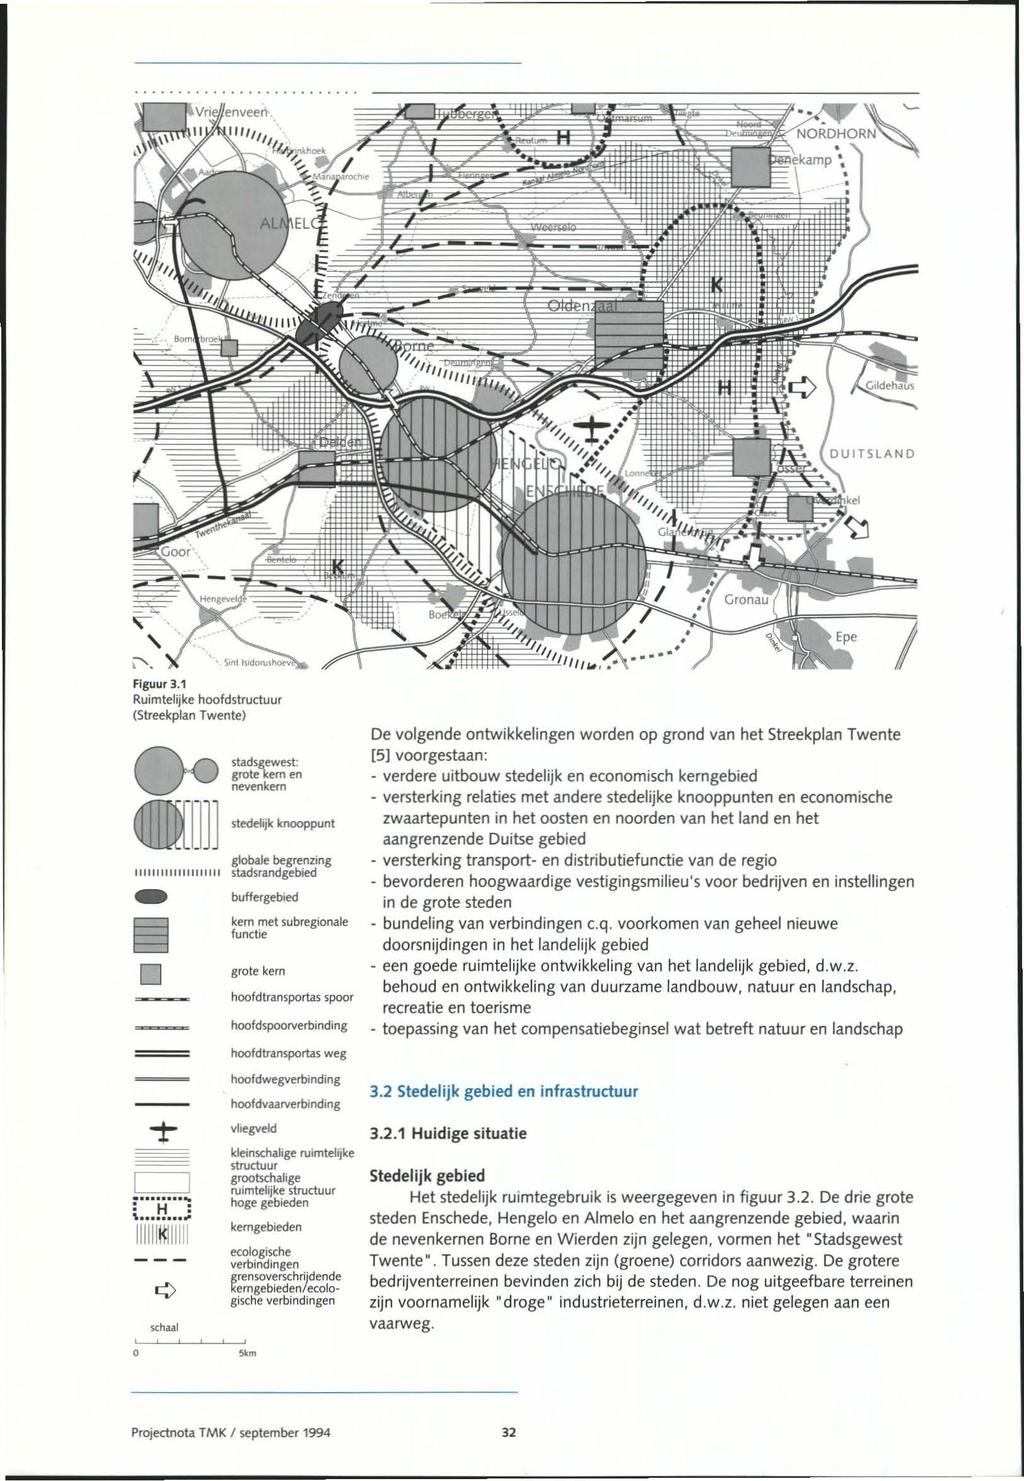 ;"'. Figuur 3.1 Ruimtelijke hoofdstructuur <Streekplan Twente) o stadsgewest grote kern en nevenkem stedelijk knooppunt giobale begrenzing Itlllllllllllllllill stadsrandgebied.